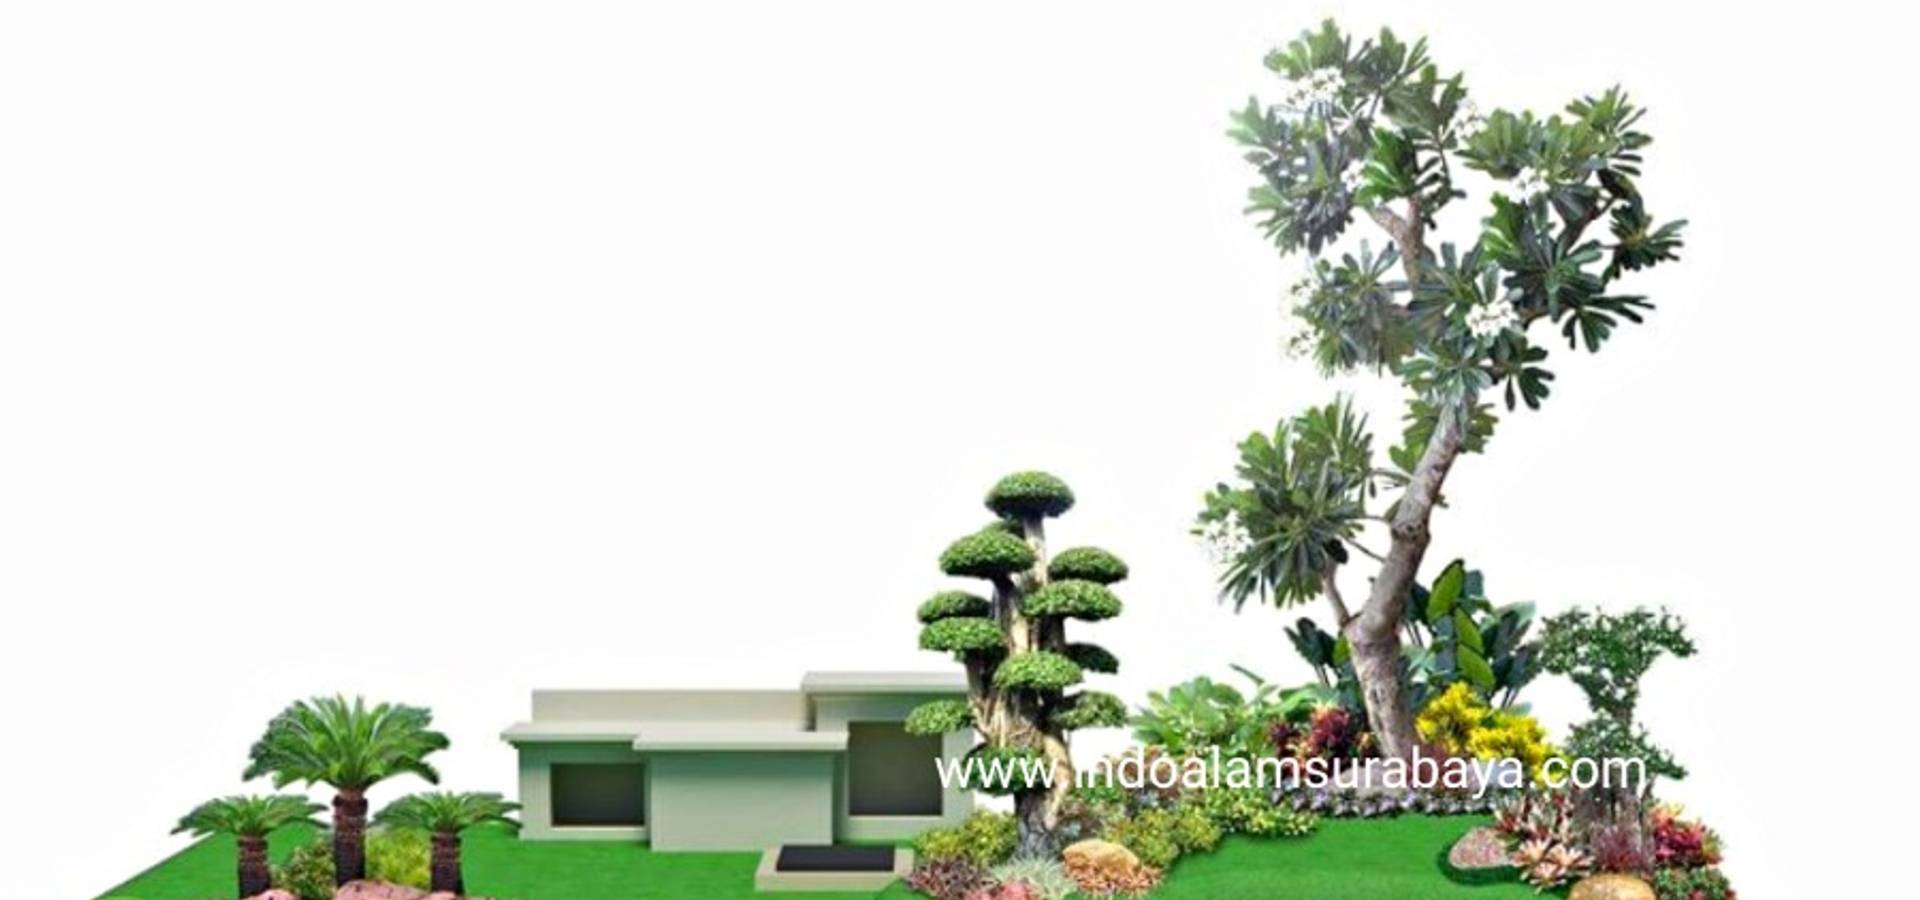 Tukang Taman Surabaya | Indo Alam Landscape